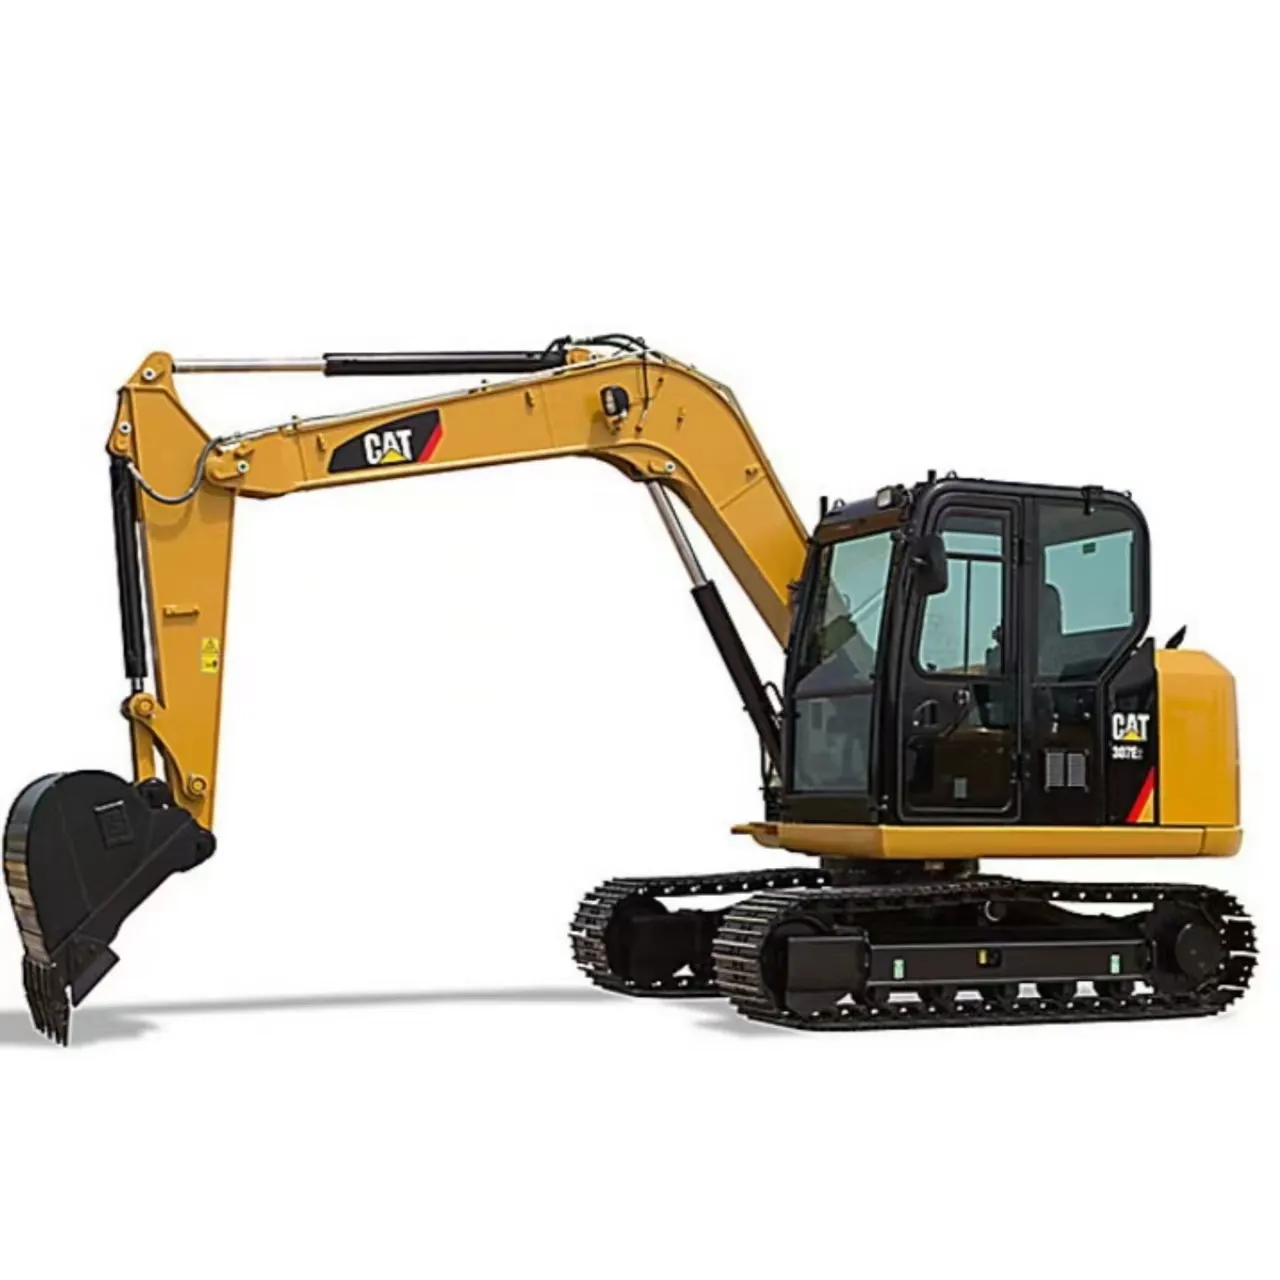 Envío gratis excavadora usada Caterpillar CAT 307 307D 7ton máquina excavadora sobre orugas